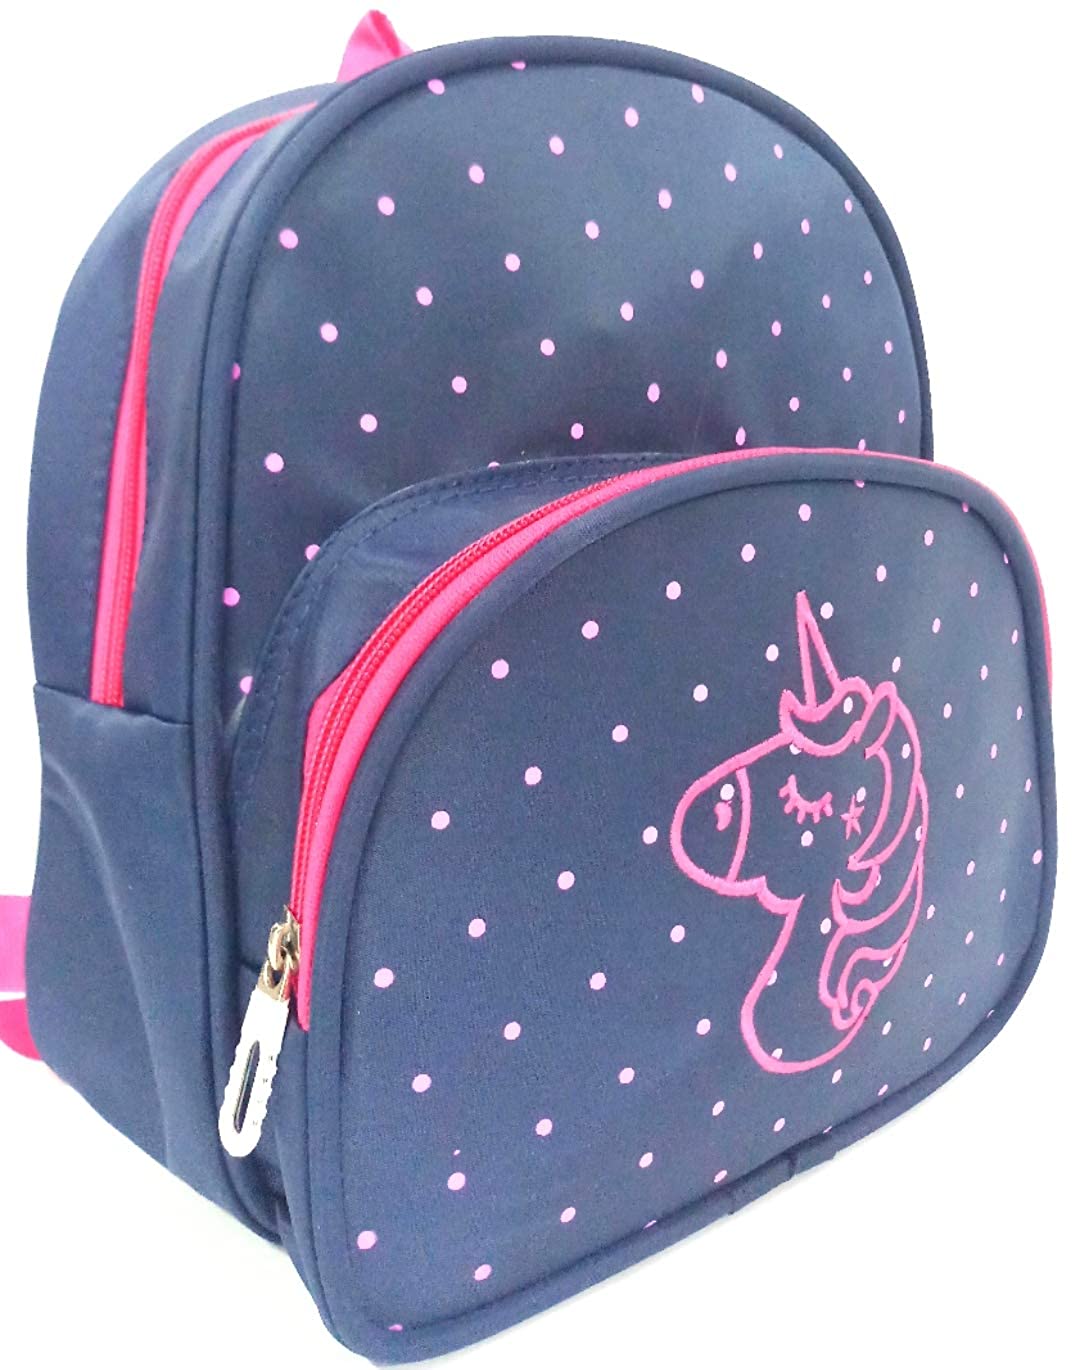 Buy Poplins Girls Unicorn Sling Purple Colour Bag at .in